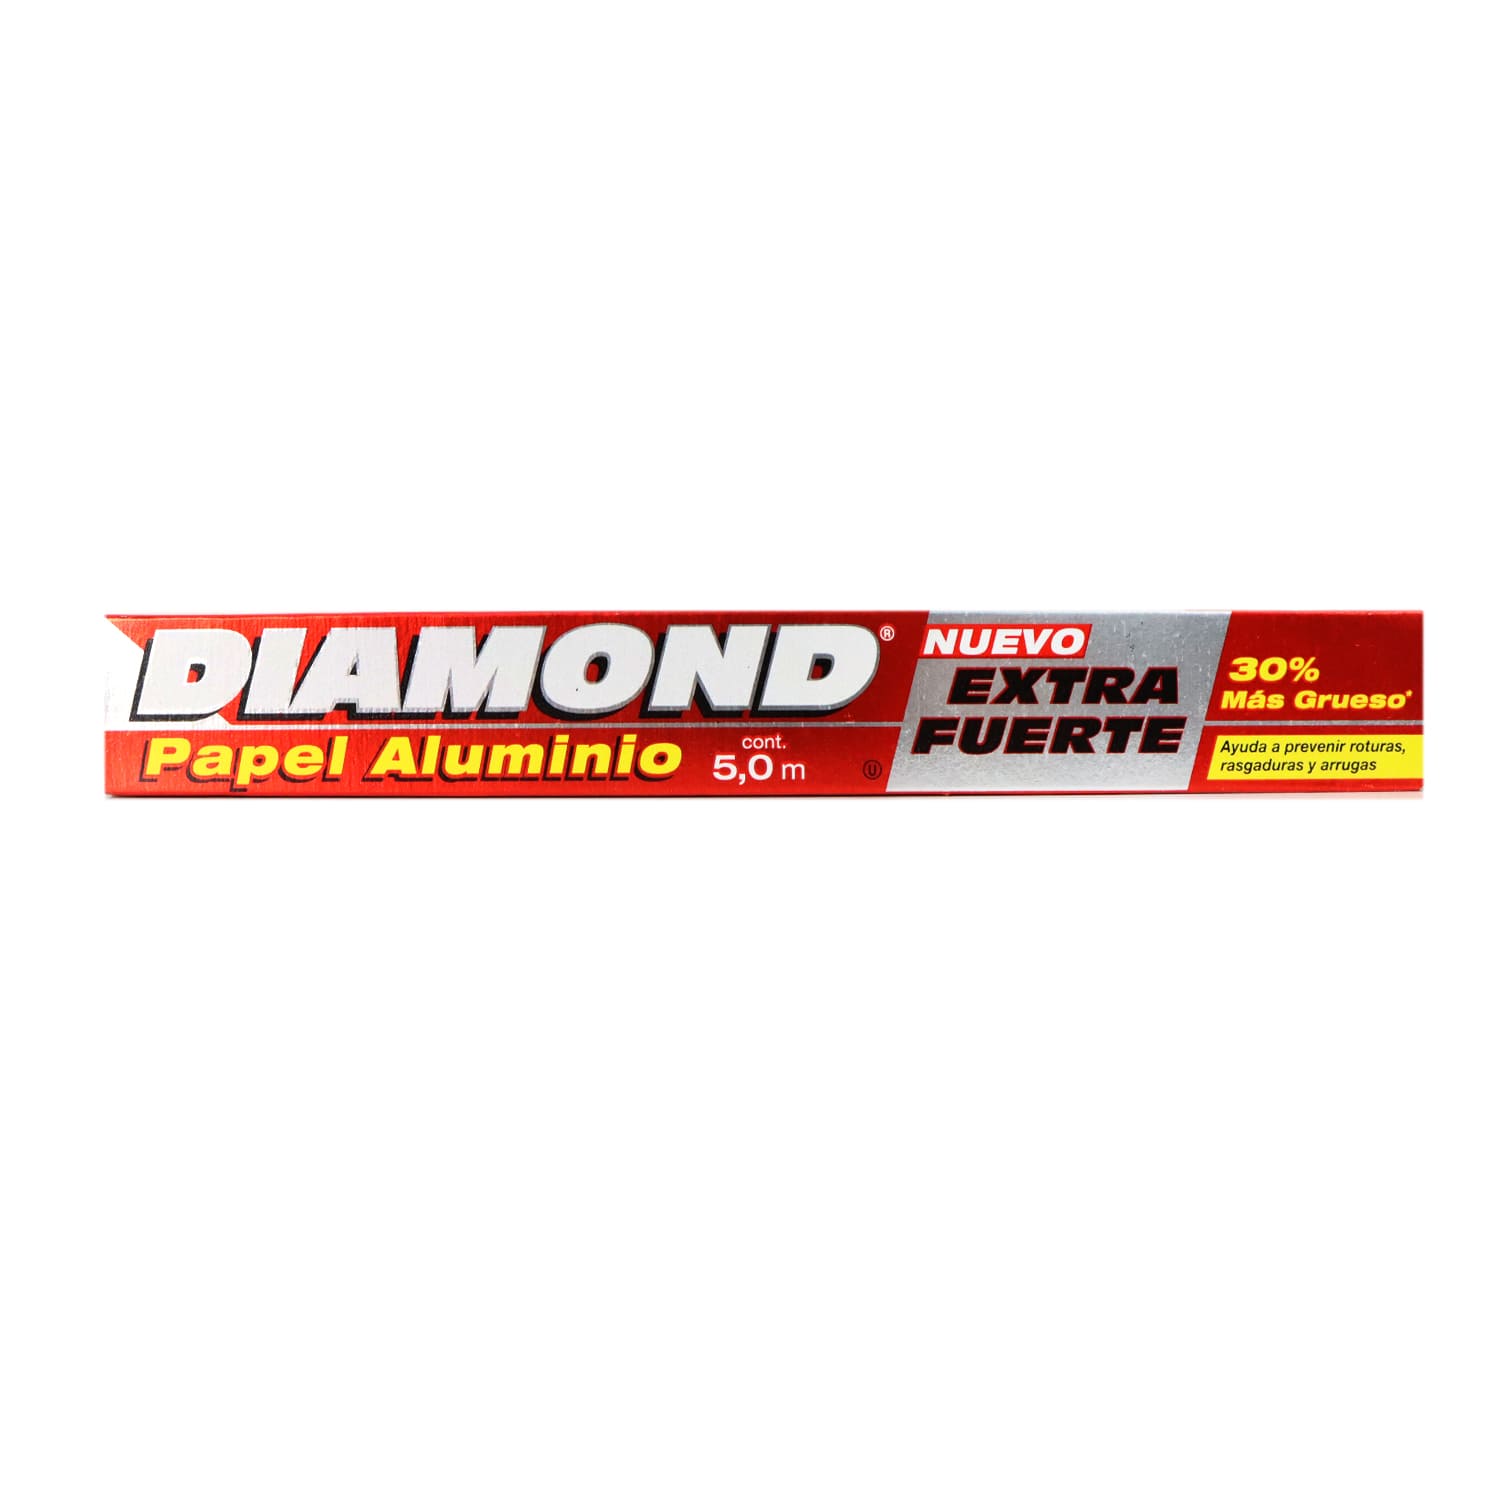 Diamond New Aluminum Foil Heavy Duty 16 sqft